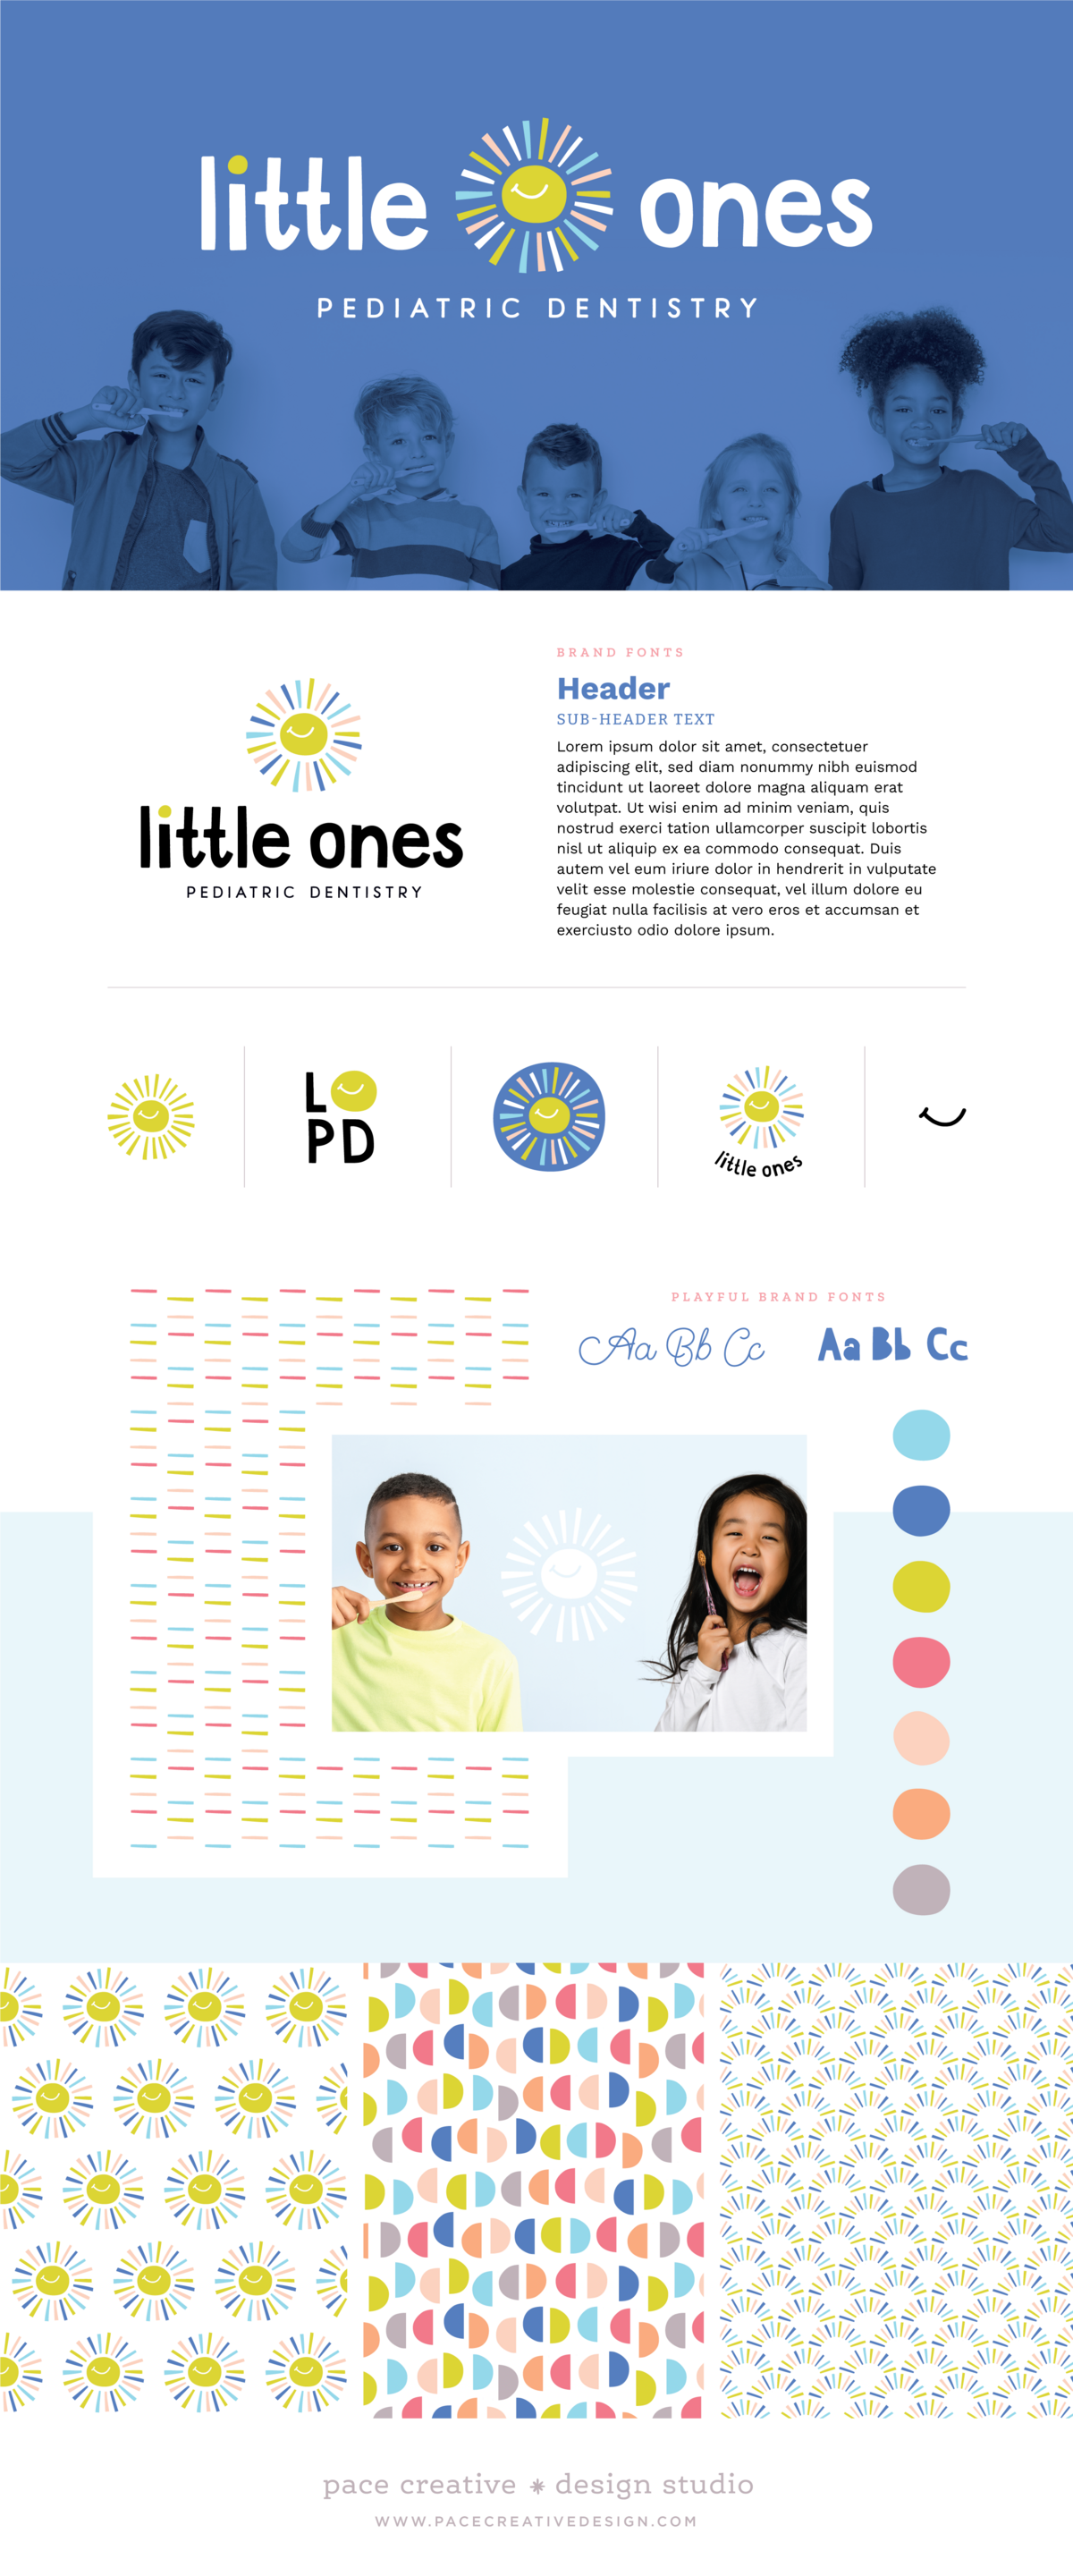 Little Ones Pediatric Dentistry brand design by Pace Creative Design Studio